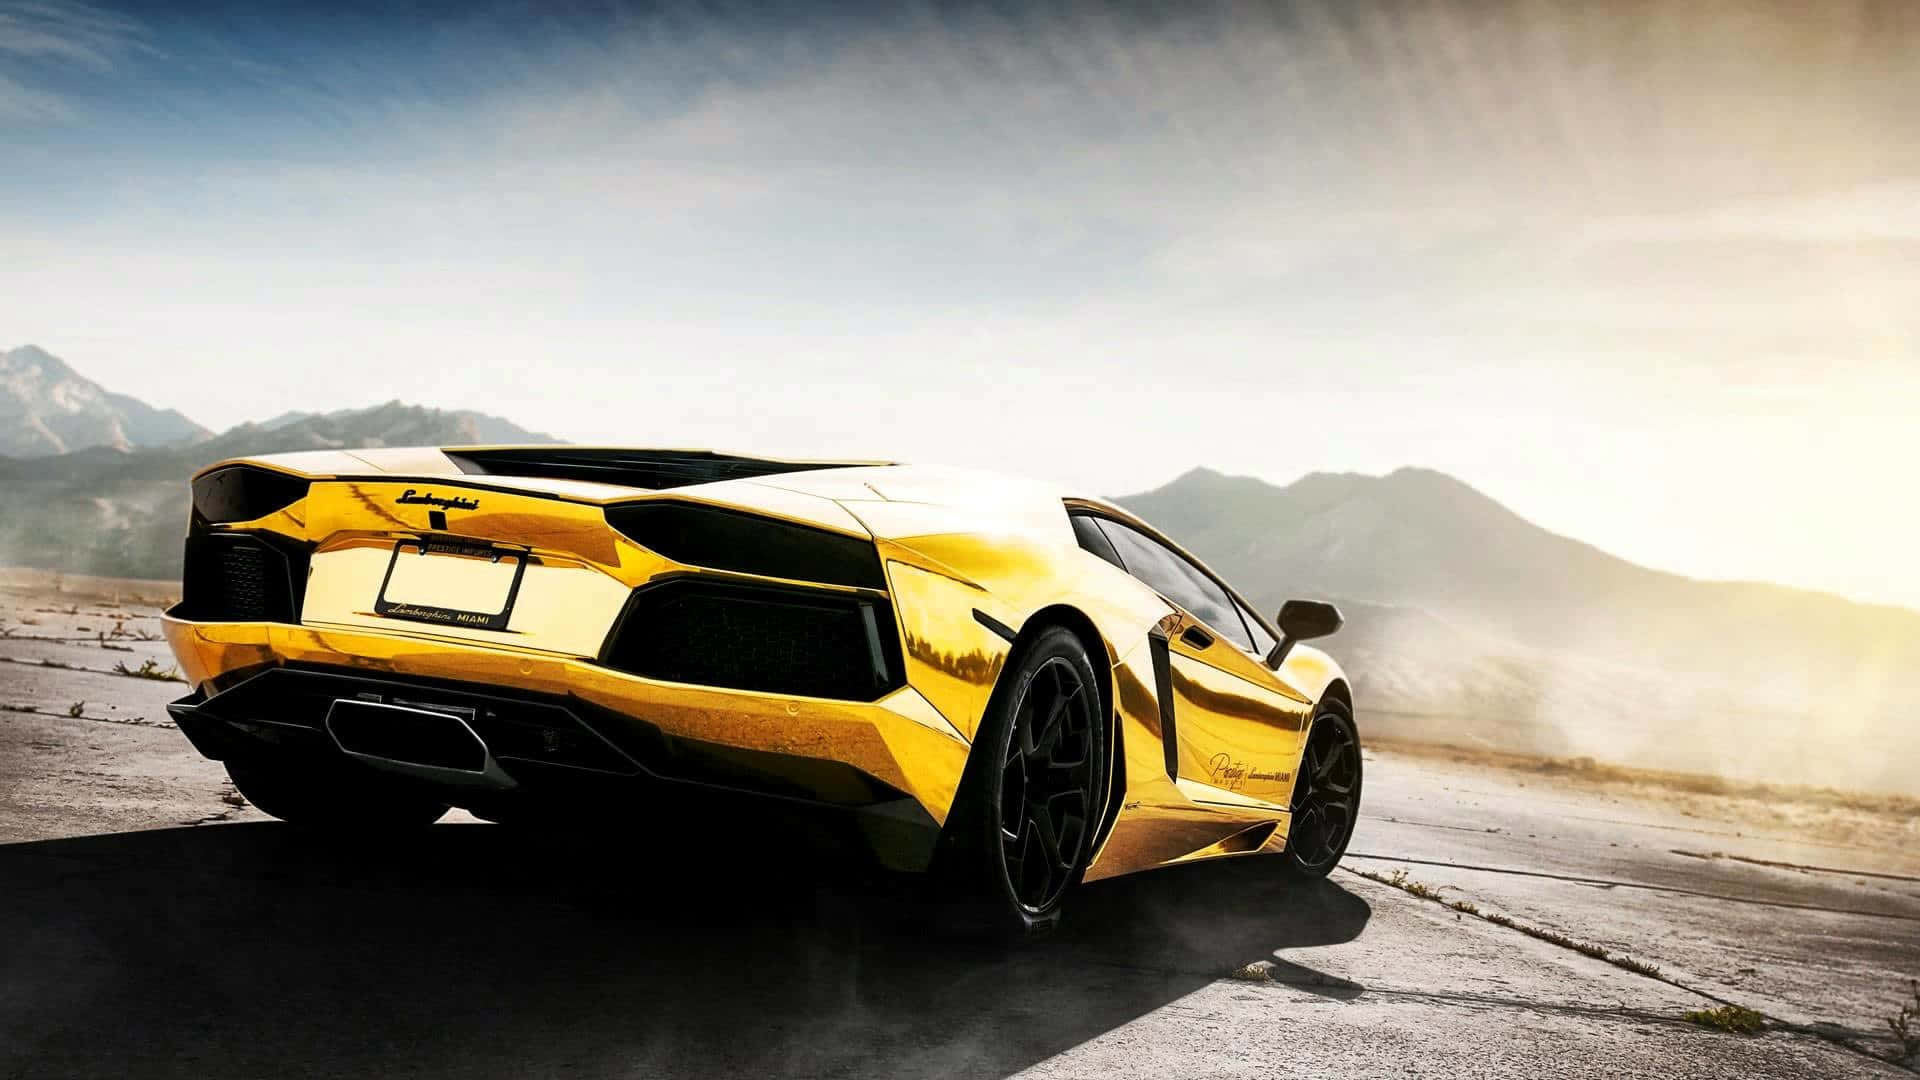 Enjoy the Power and Beauty of the Lamborghini